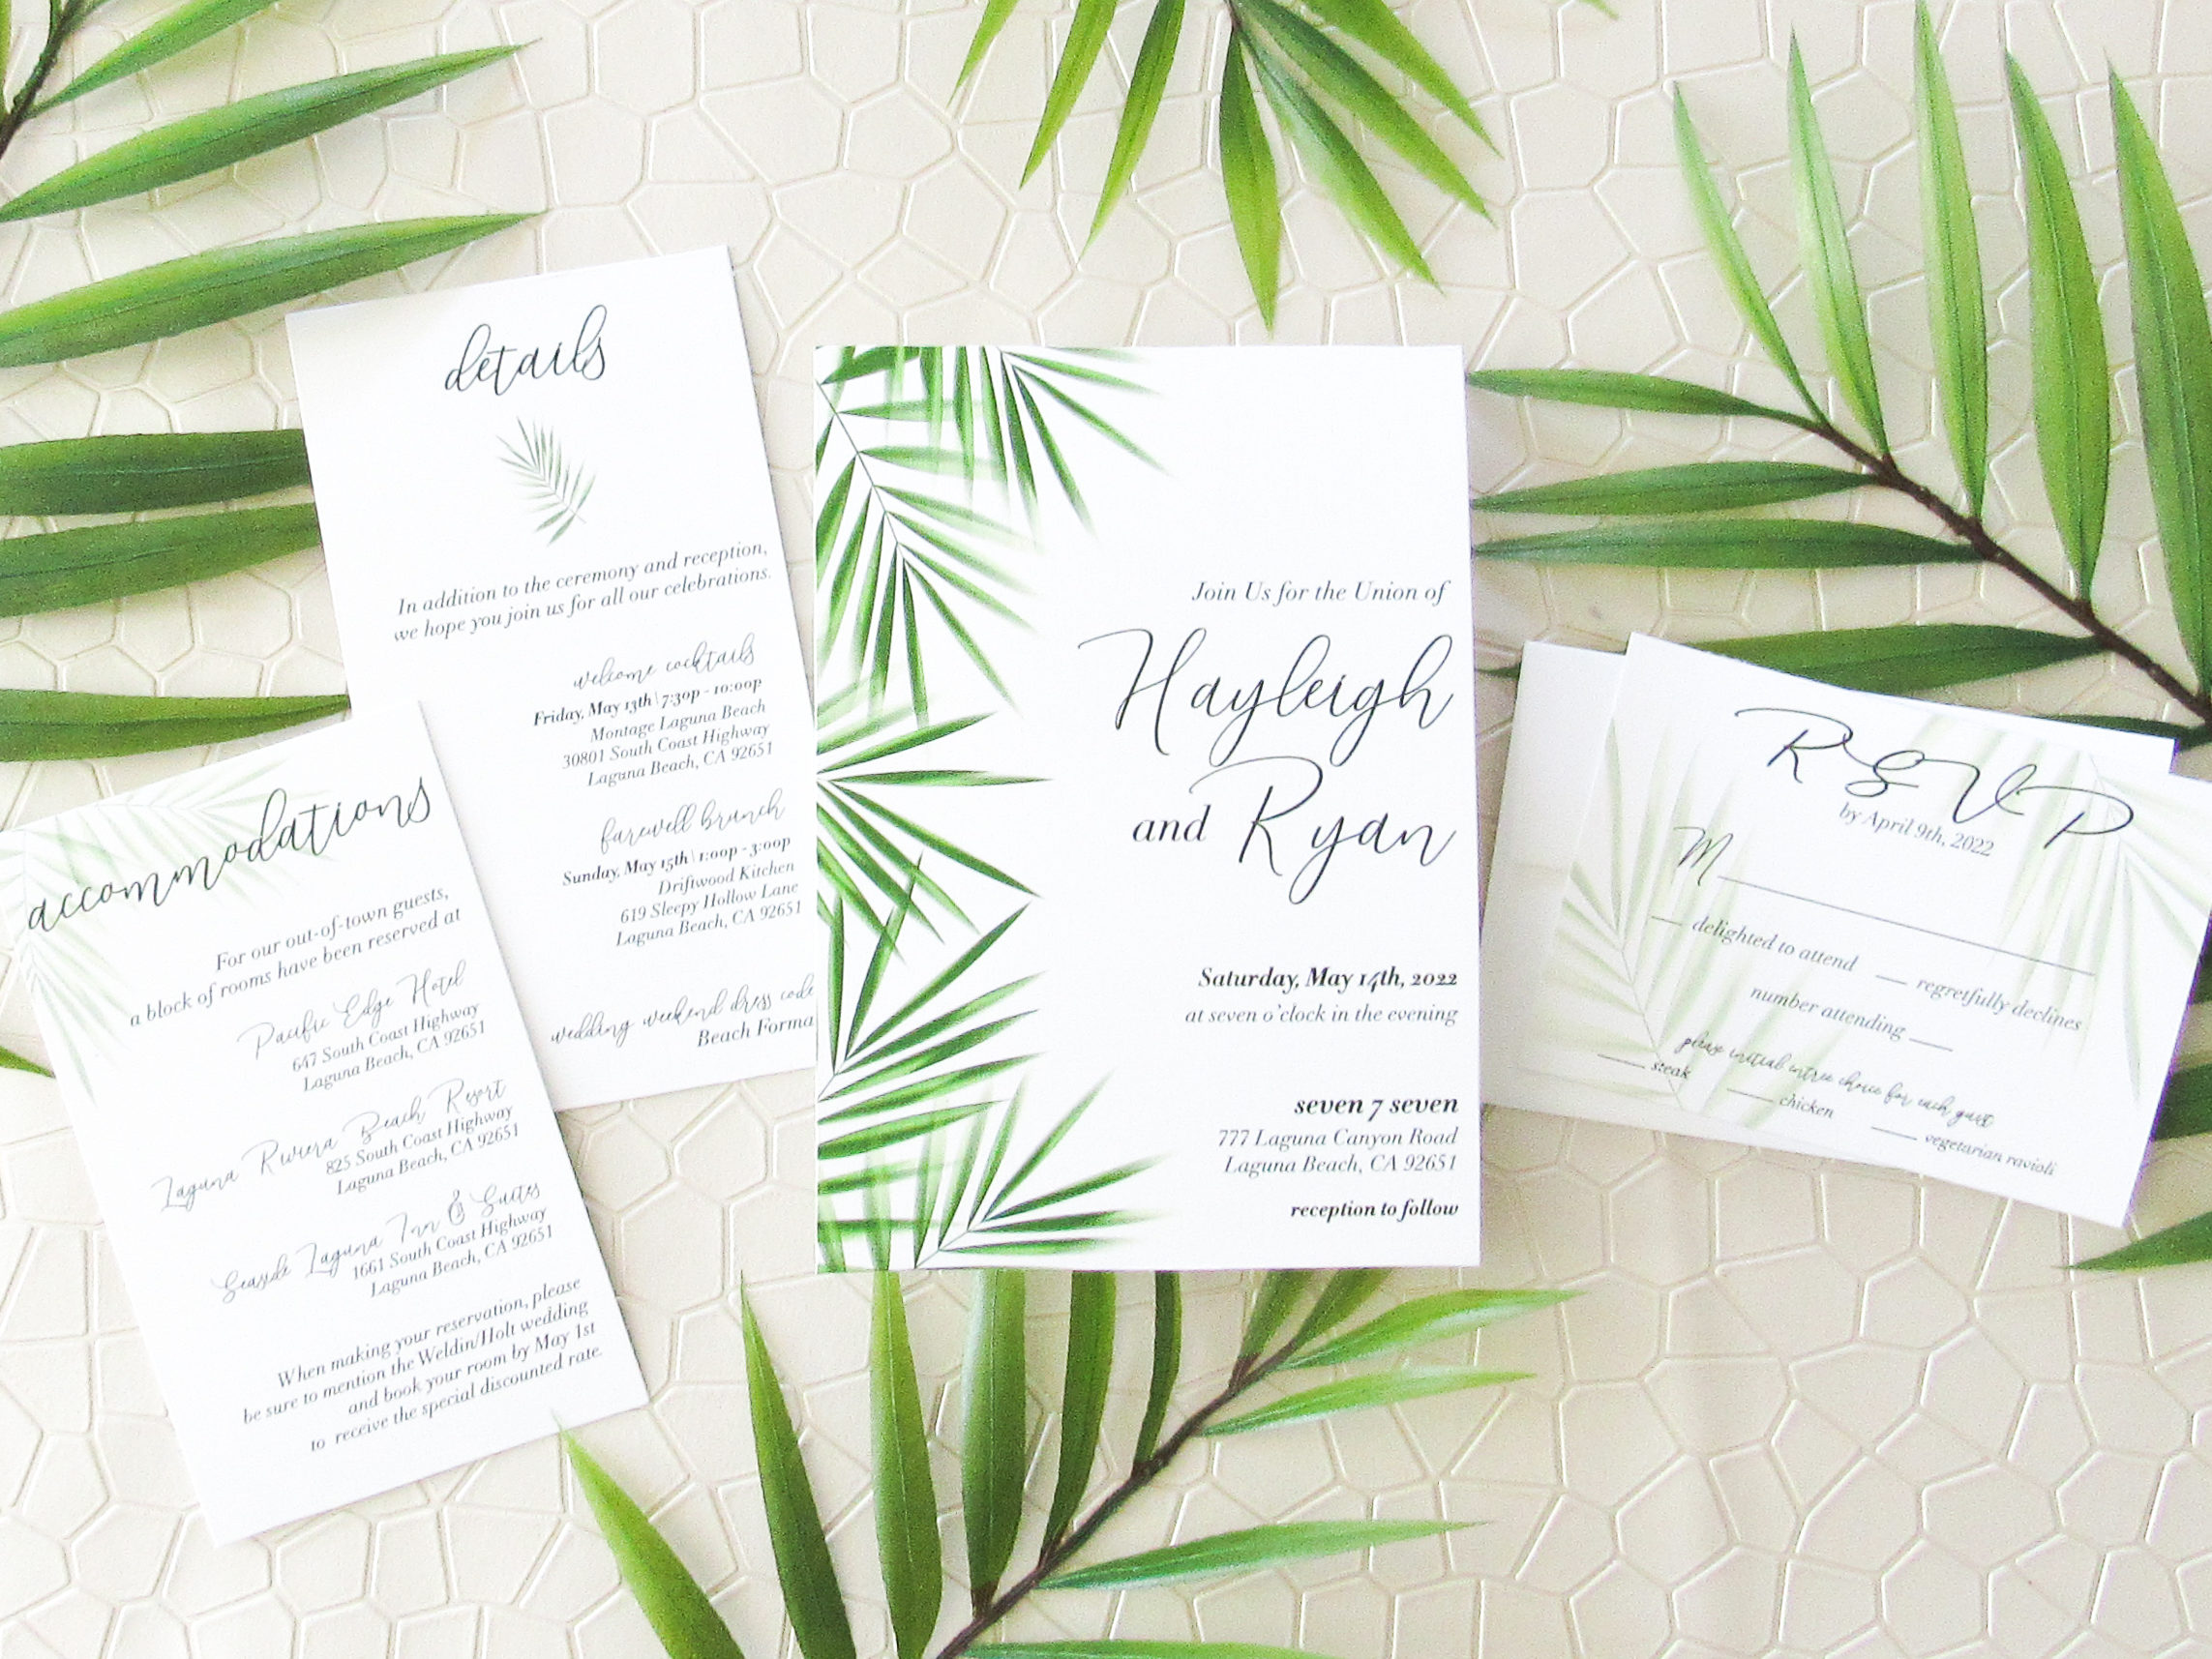 Custom Wedding Invitation Design Orange County / Clean and simple, modern wedding invitation, beach wedding invitation with palm leaves